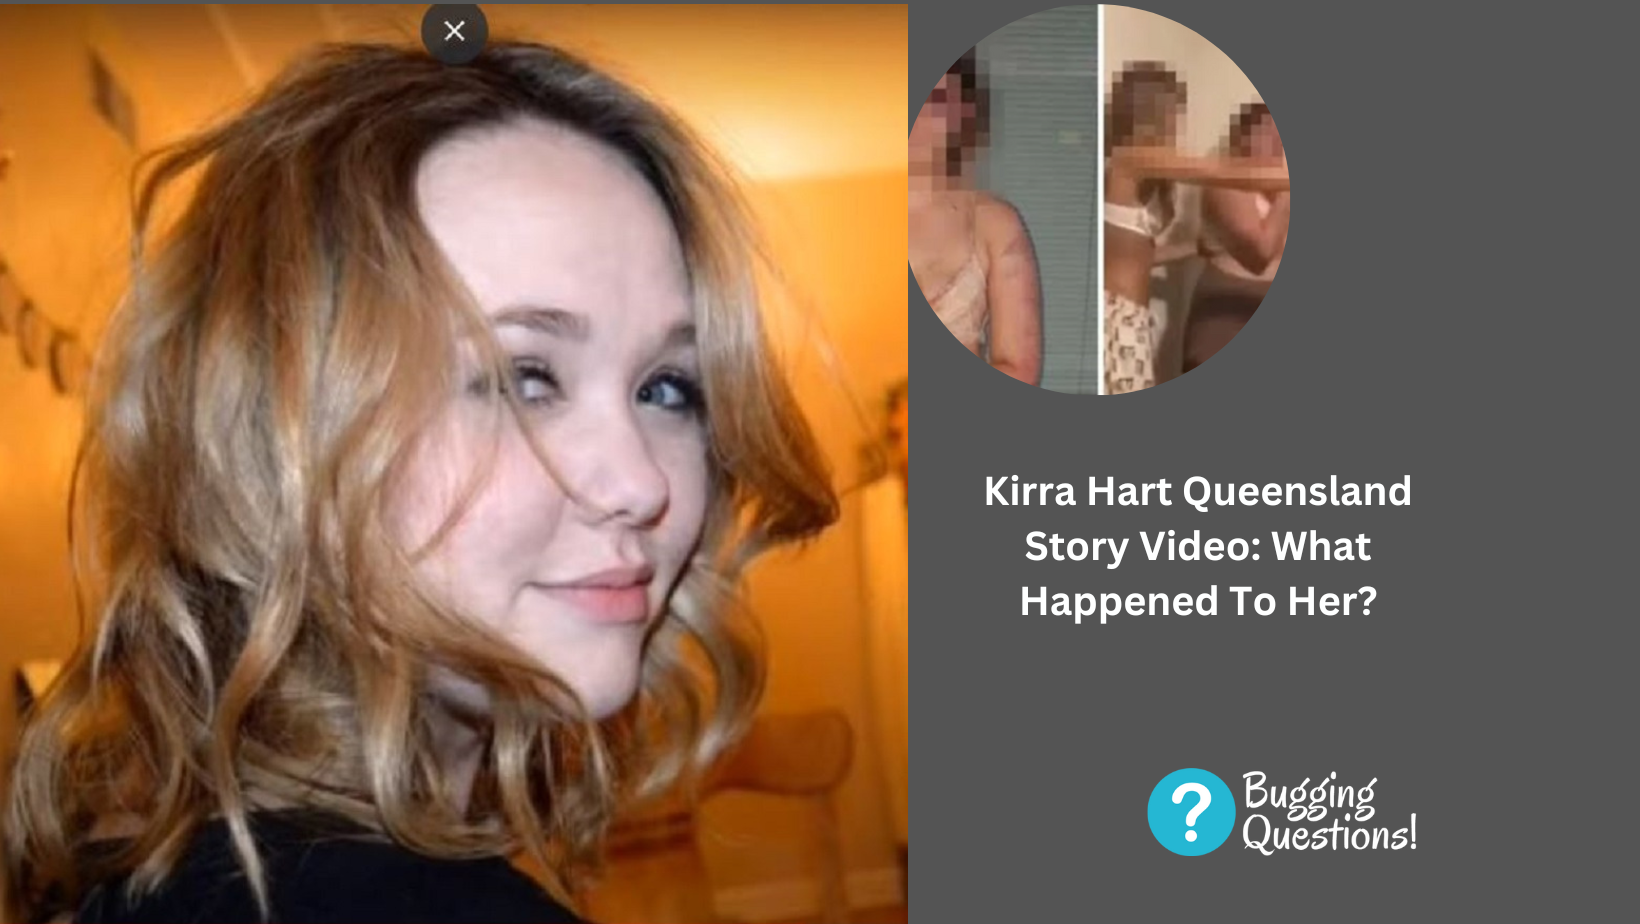 Kirra Hart Queensland Story Video: What Happened To Her?